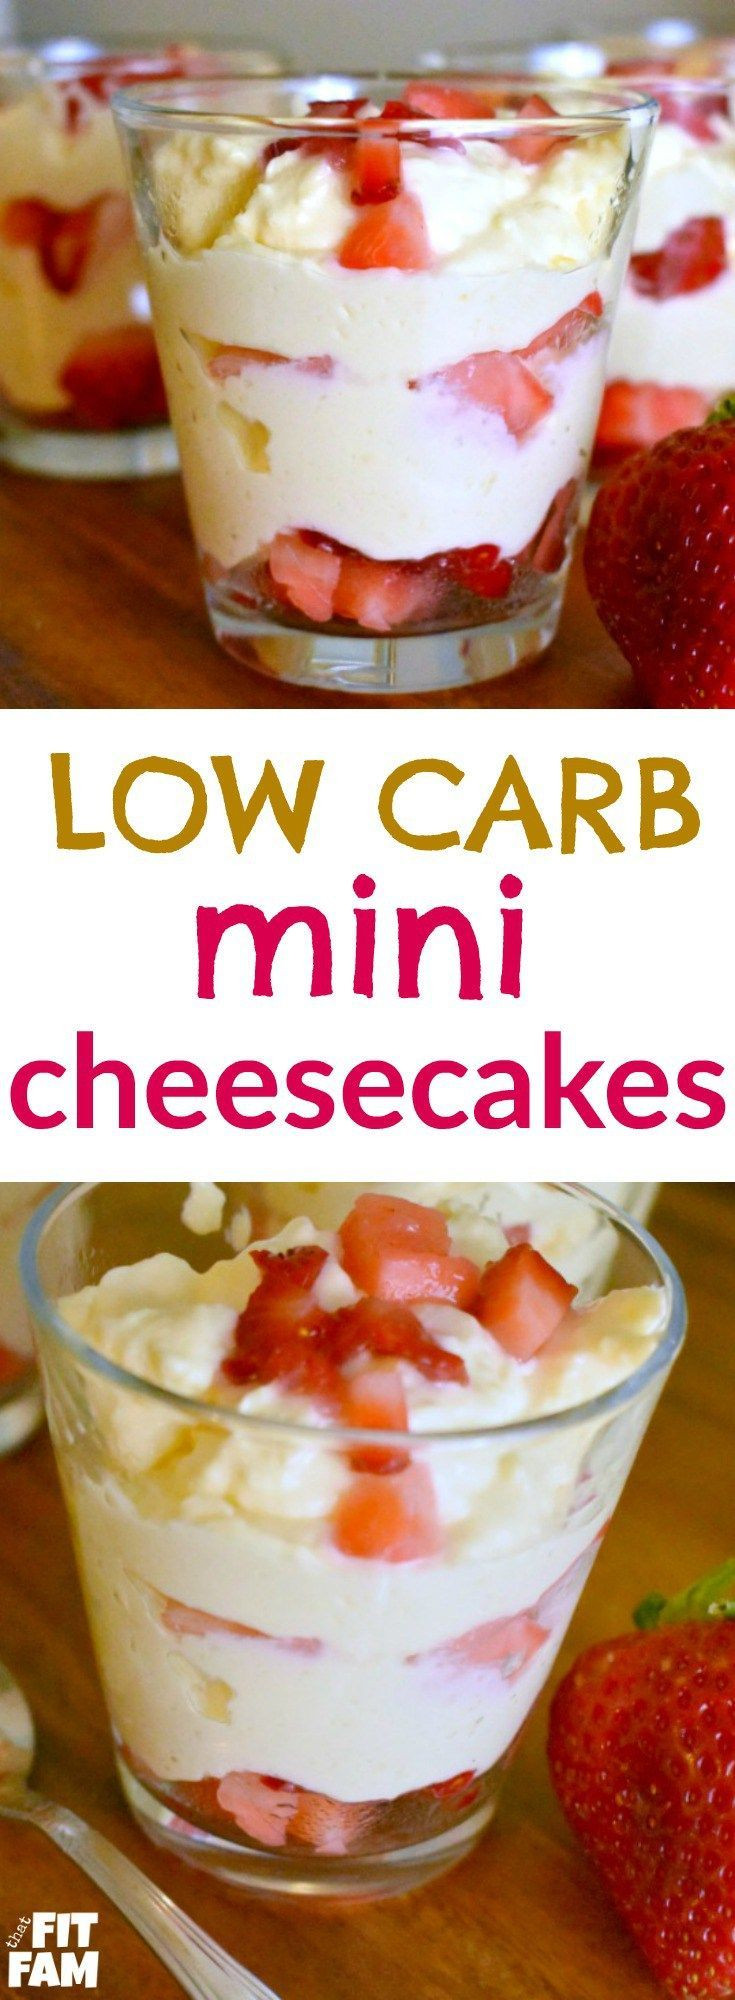 Low Carb Easy Desserts
 Best 25 Low Carb Desserts ideas on Pinterest